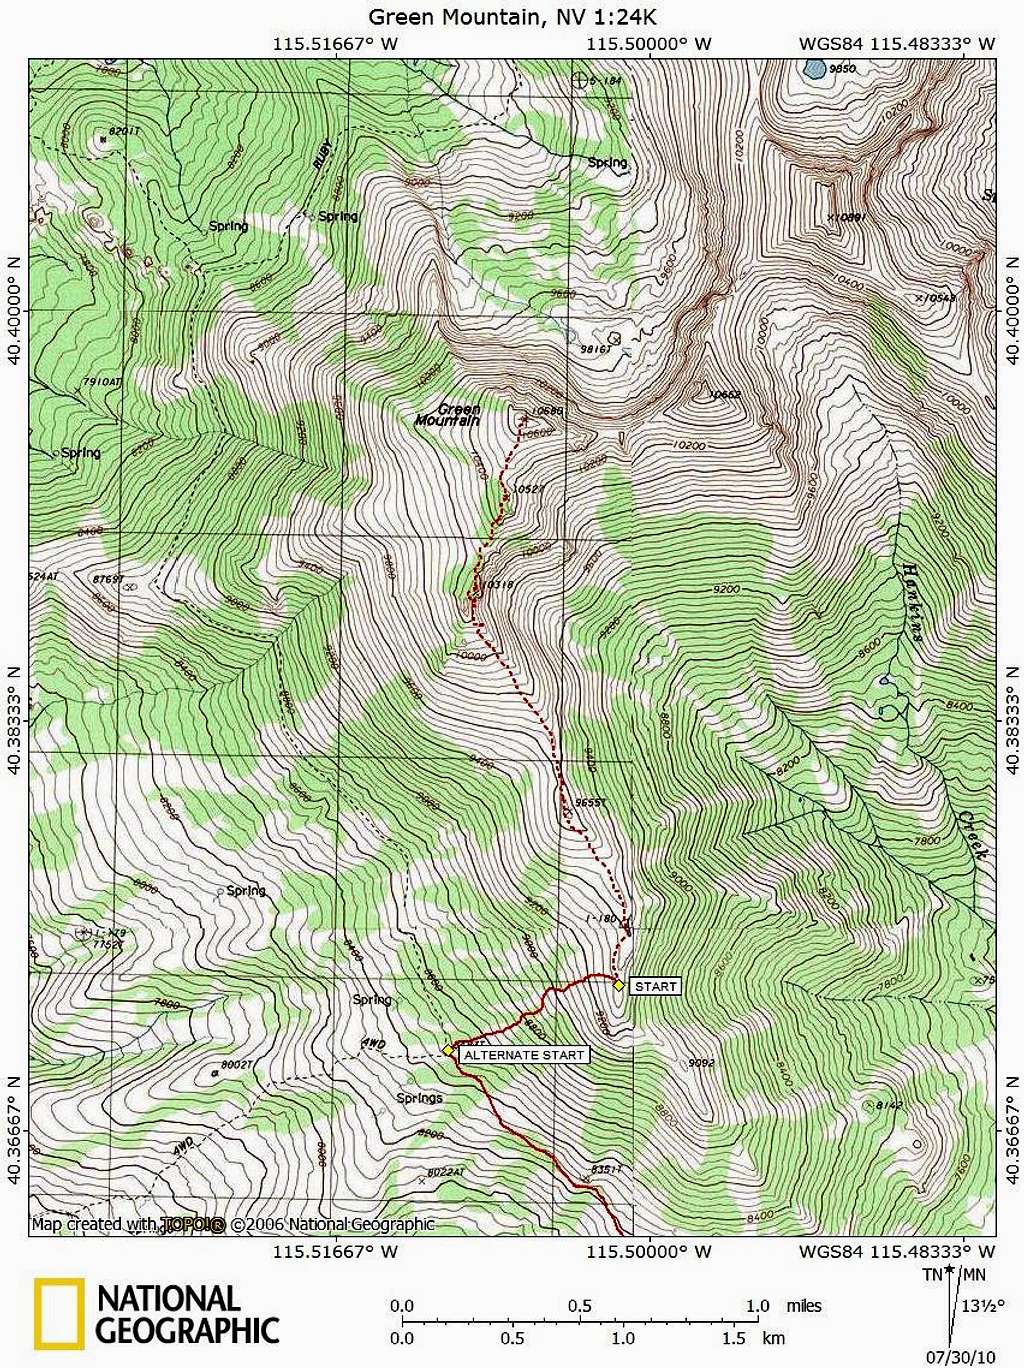 Green Mountain access route (2/2)